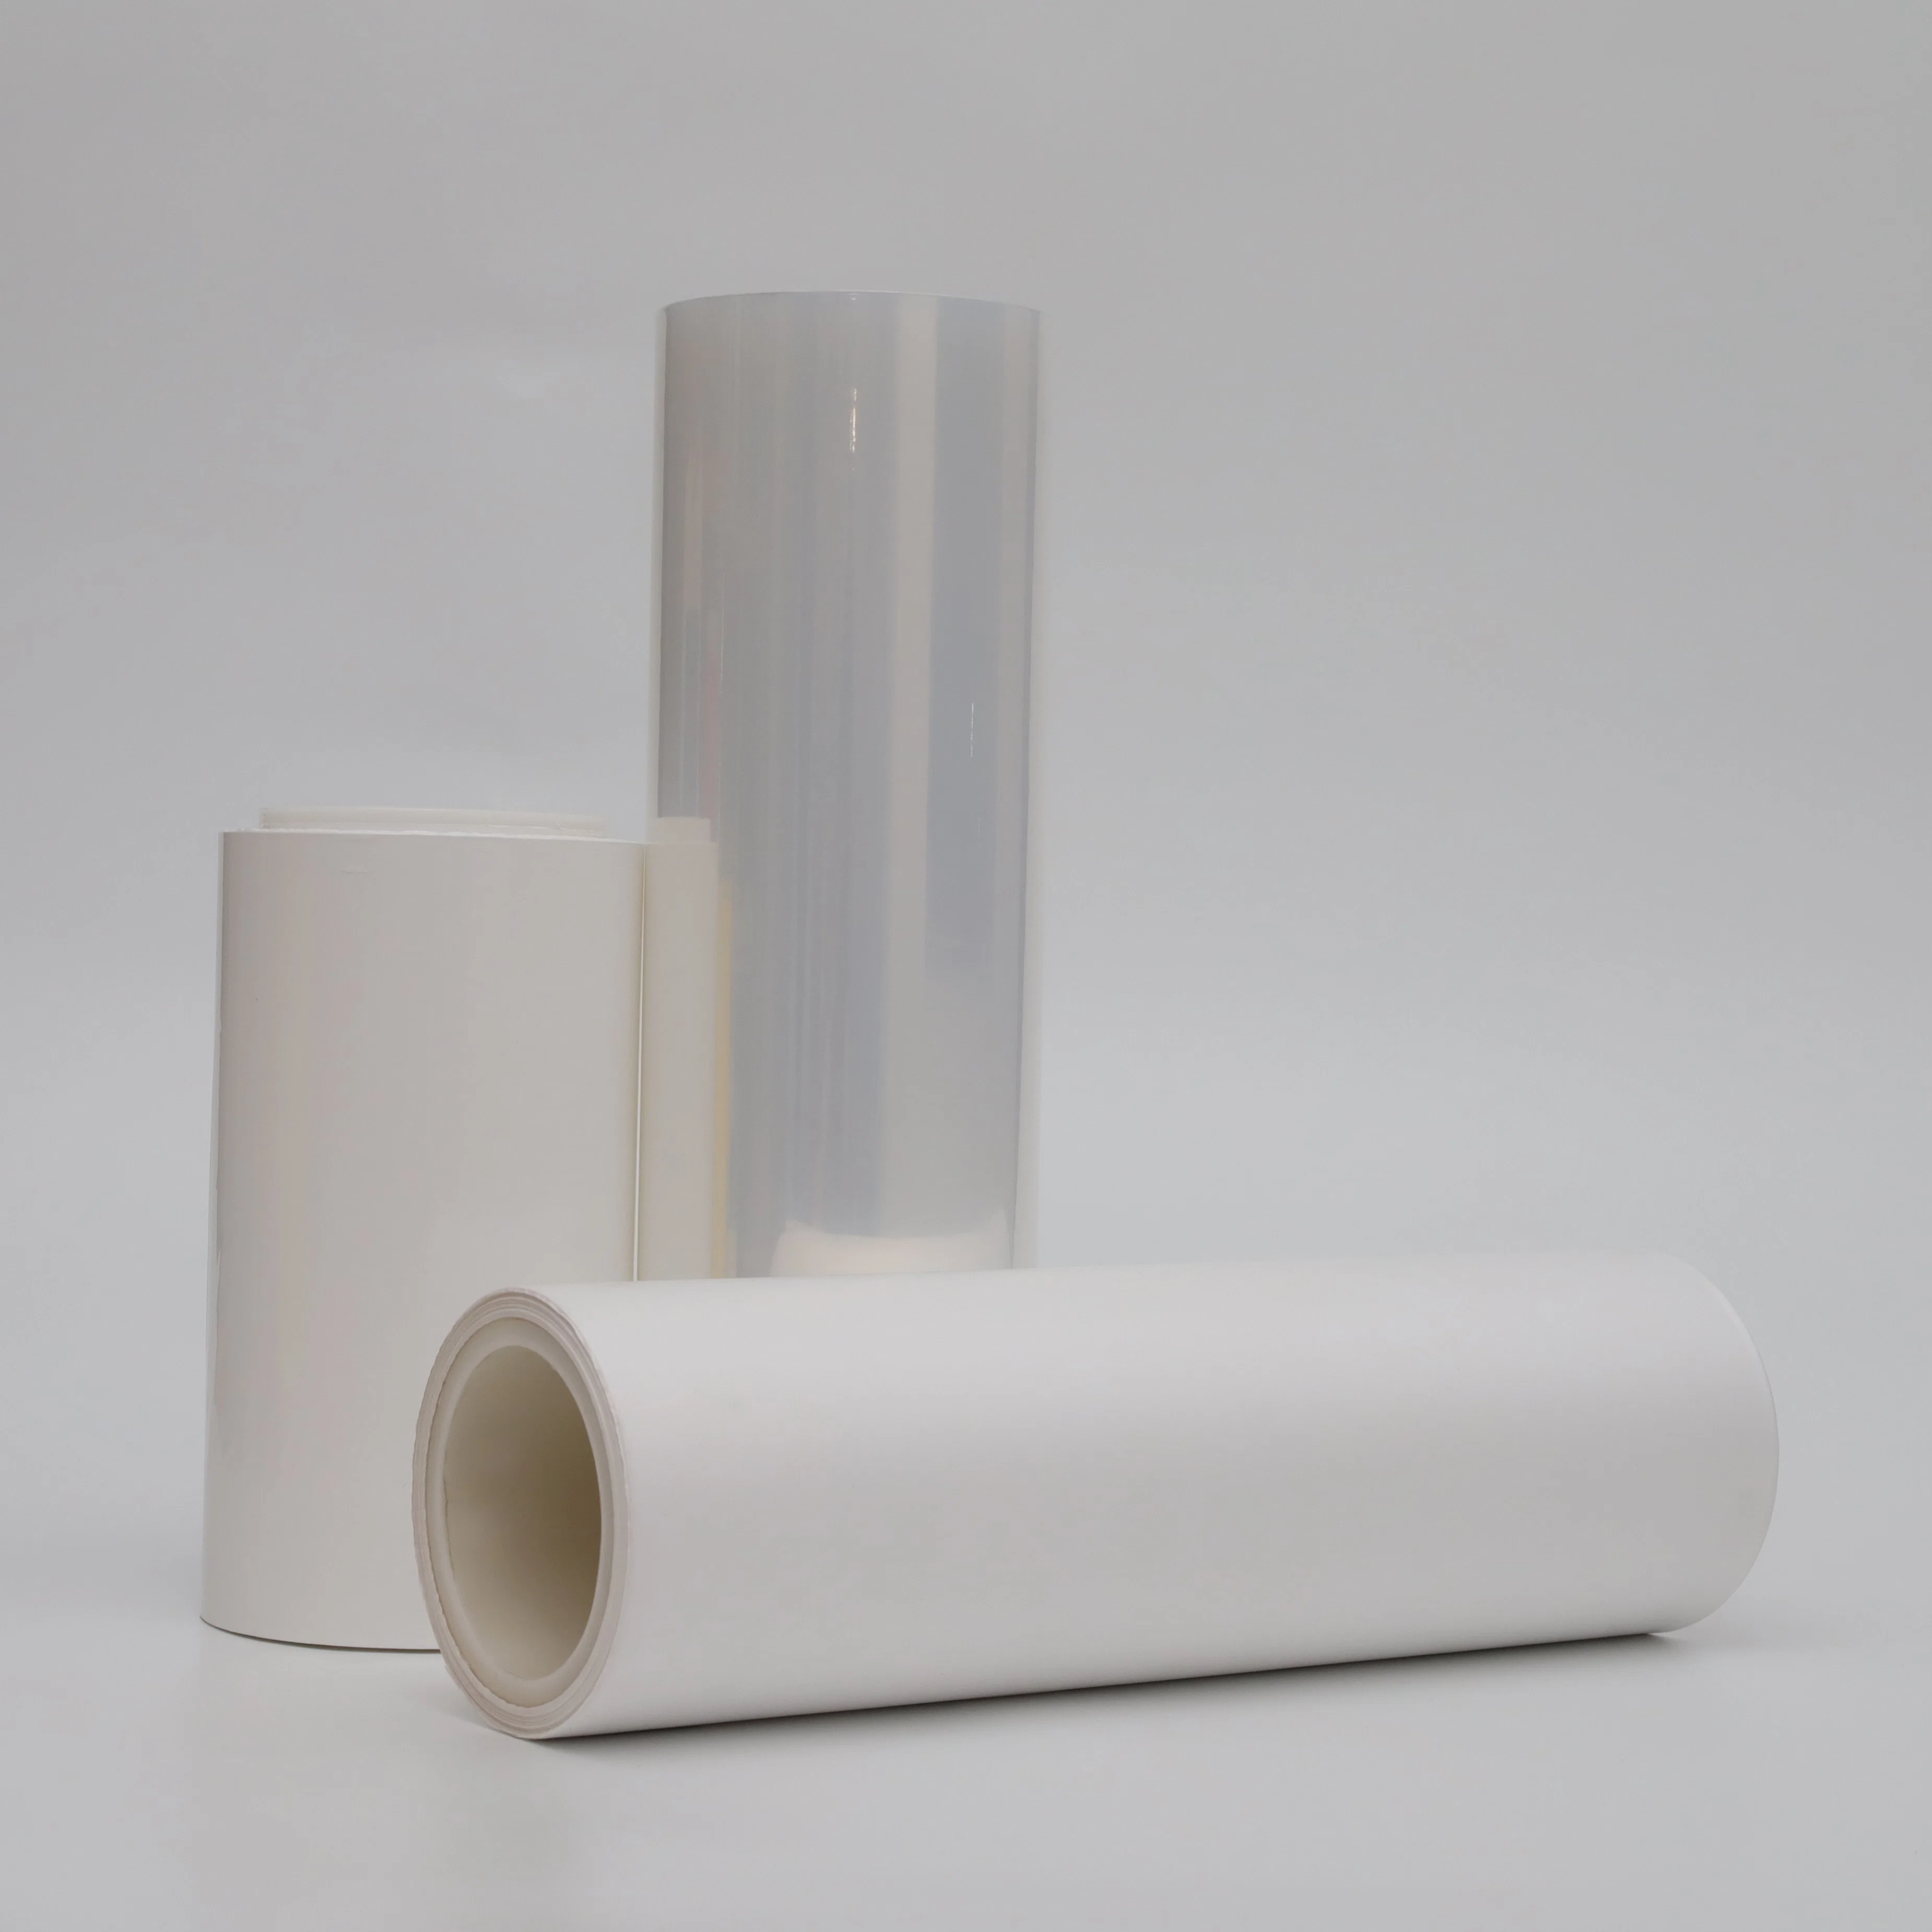 100% Recyclable Polyethylene Film PE Film Food Grade Packaging Film Plastic Film Mdope Film Mdo PE Film Printing Film Bag Making Film Recycled PE Film